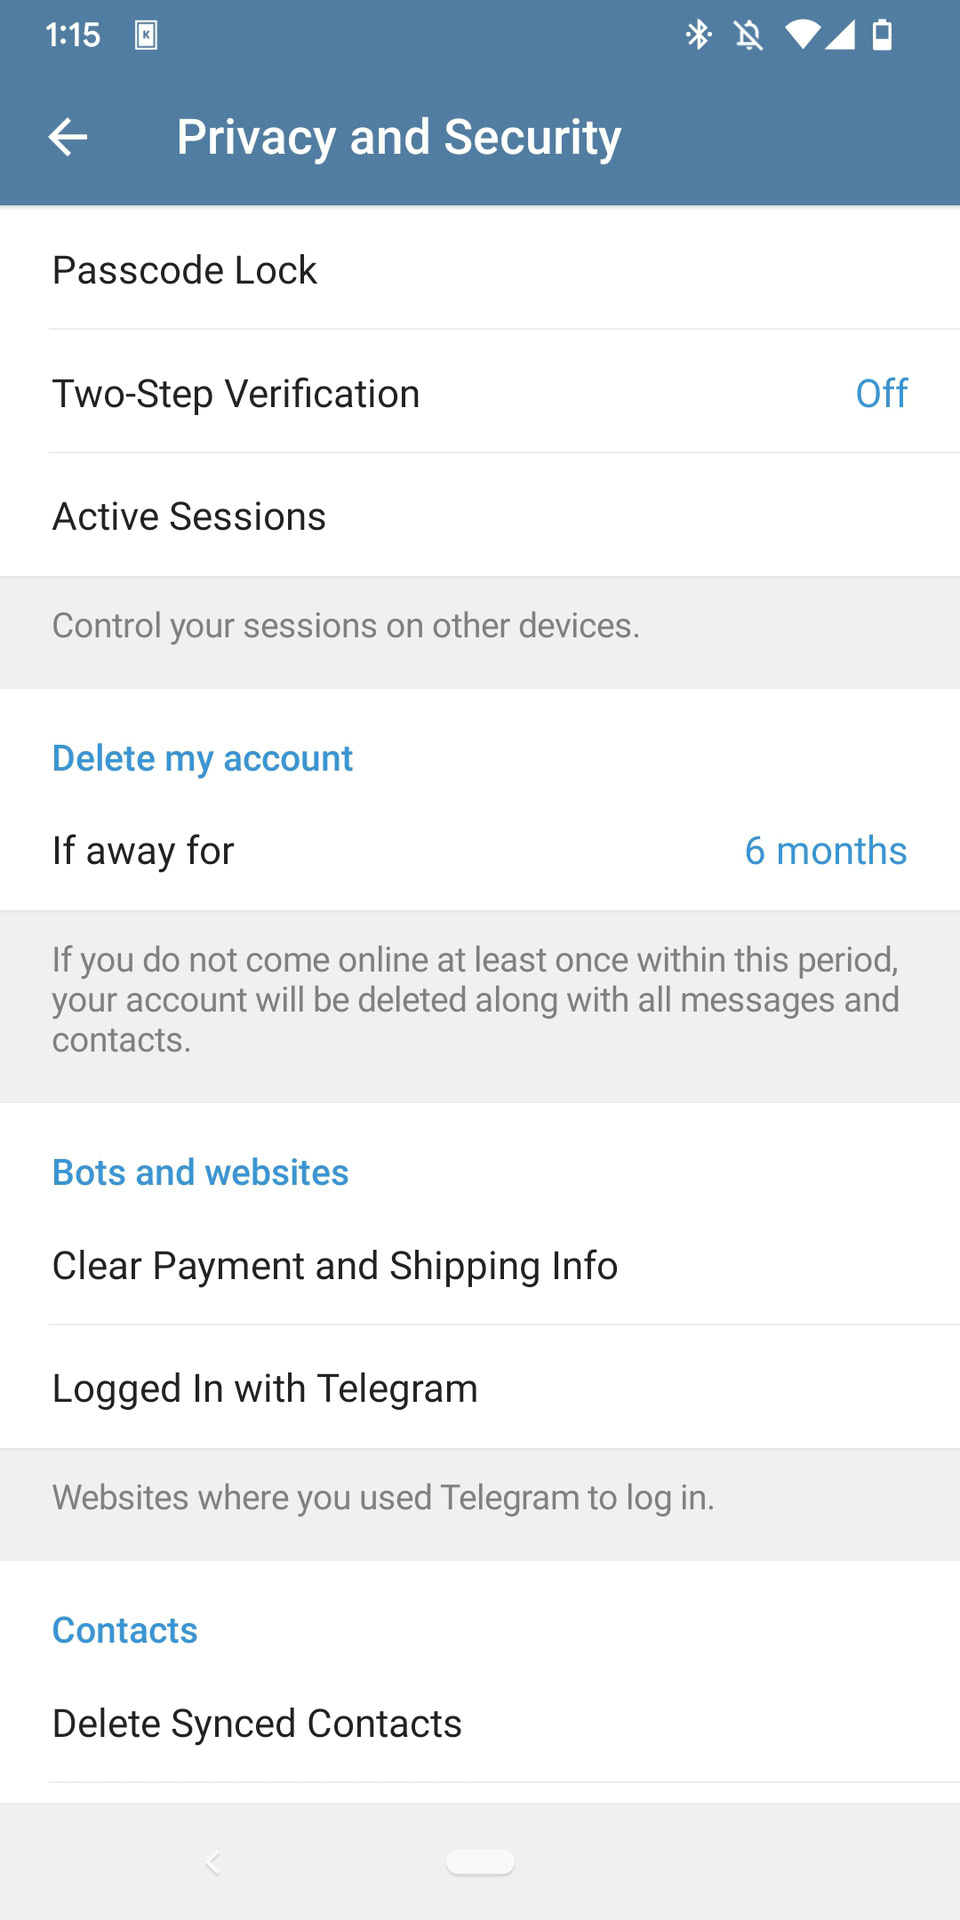 The Telegram settings menu opens 